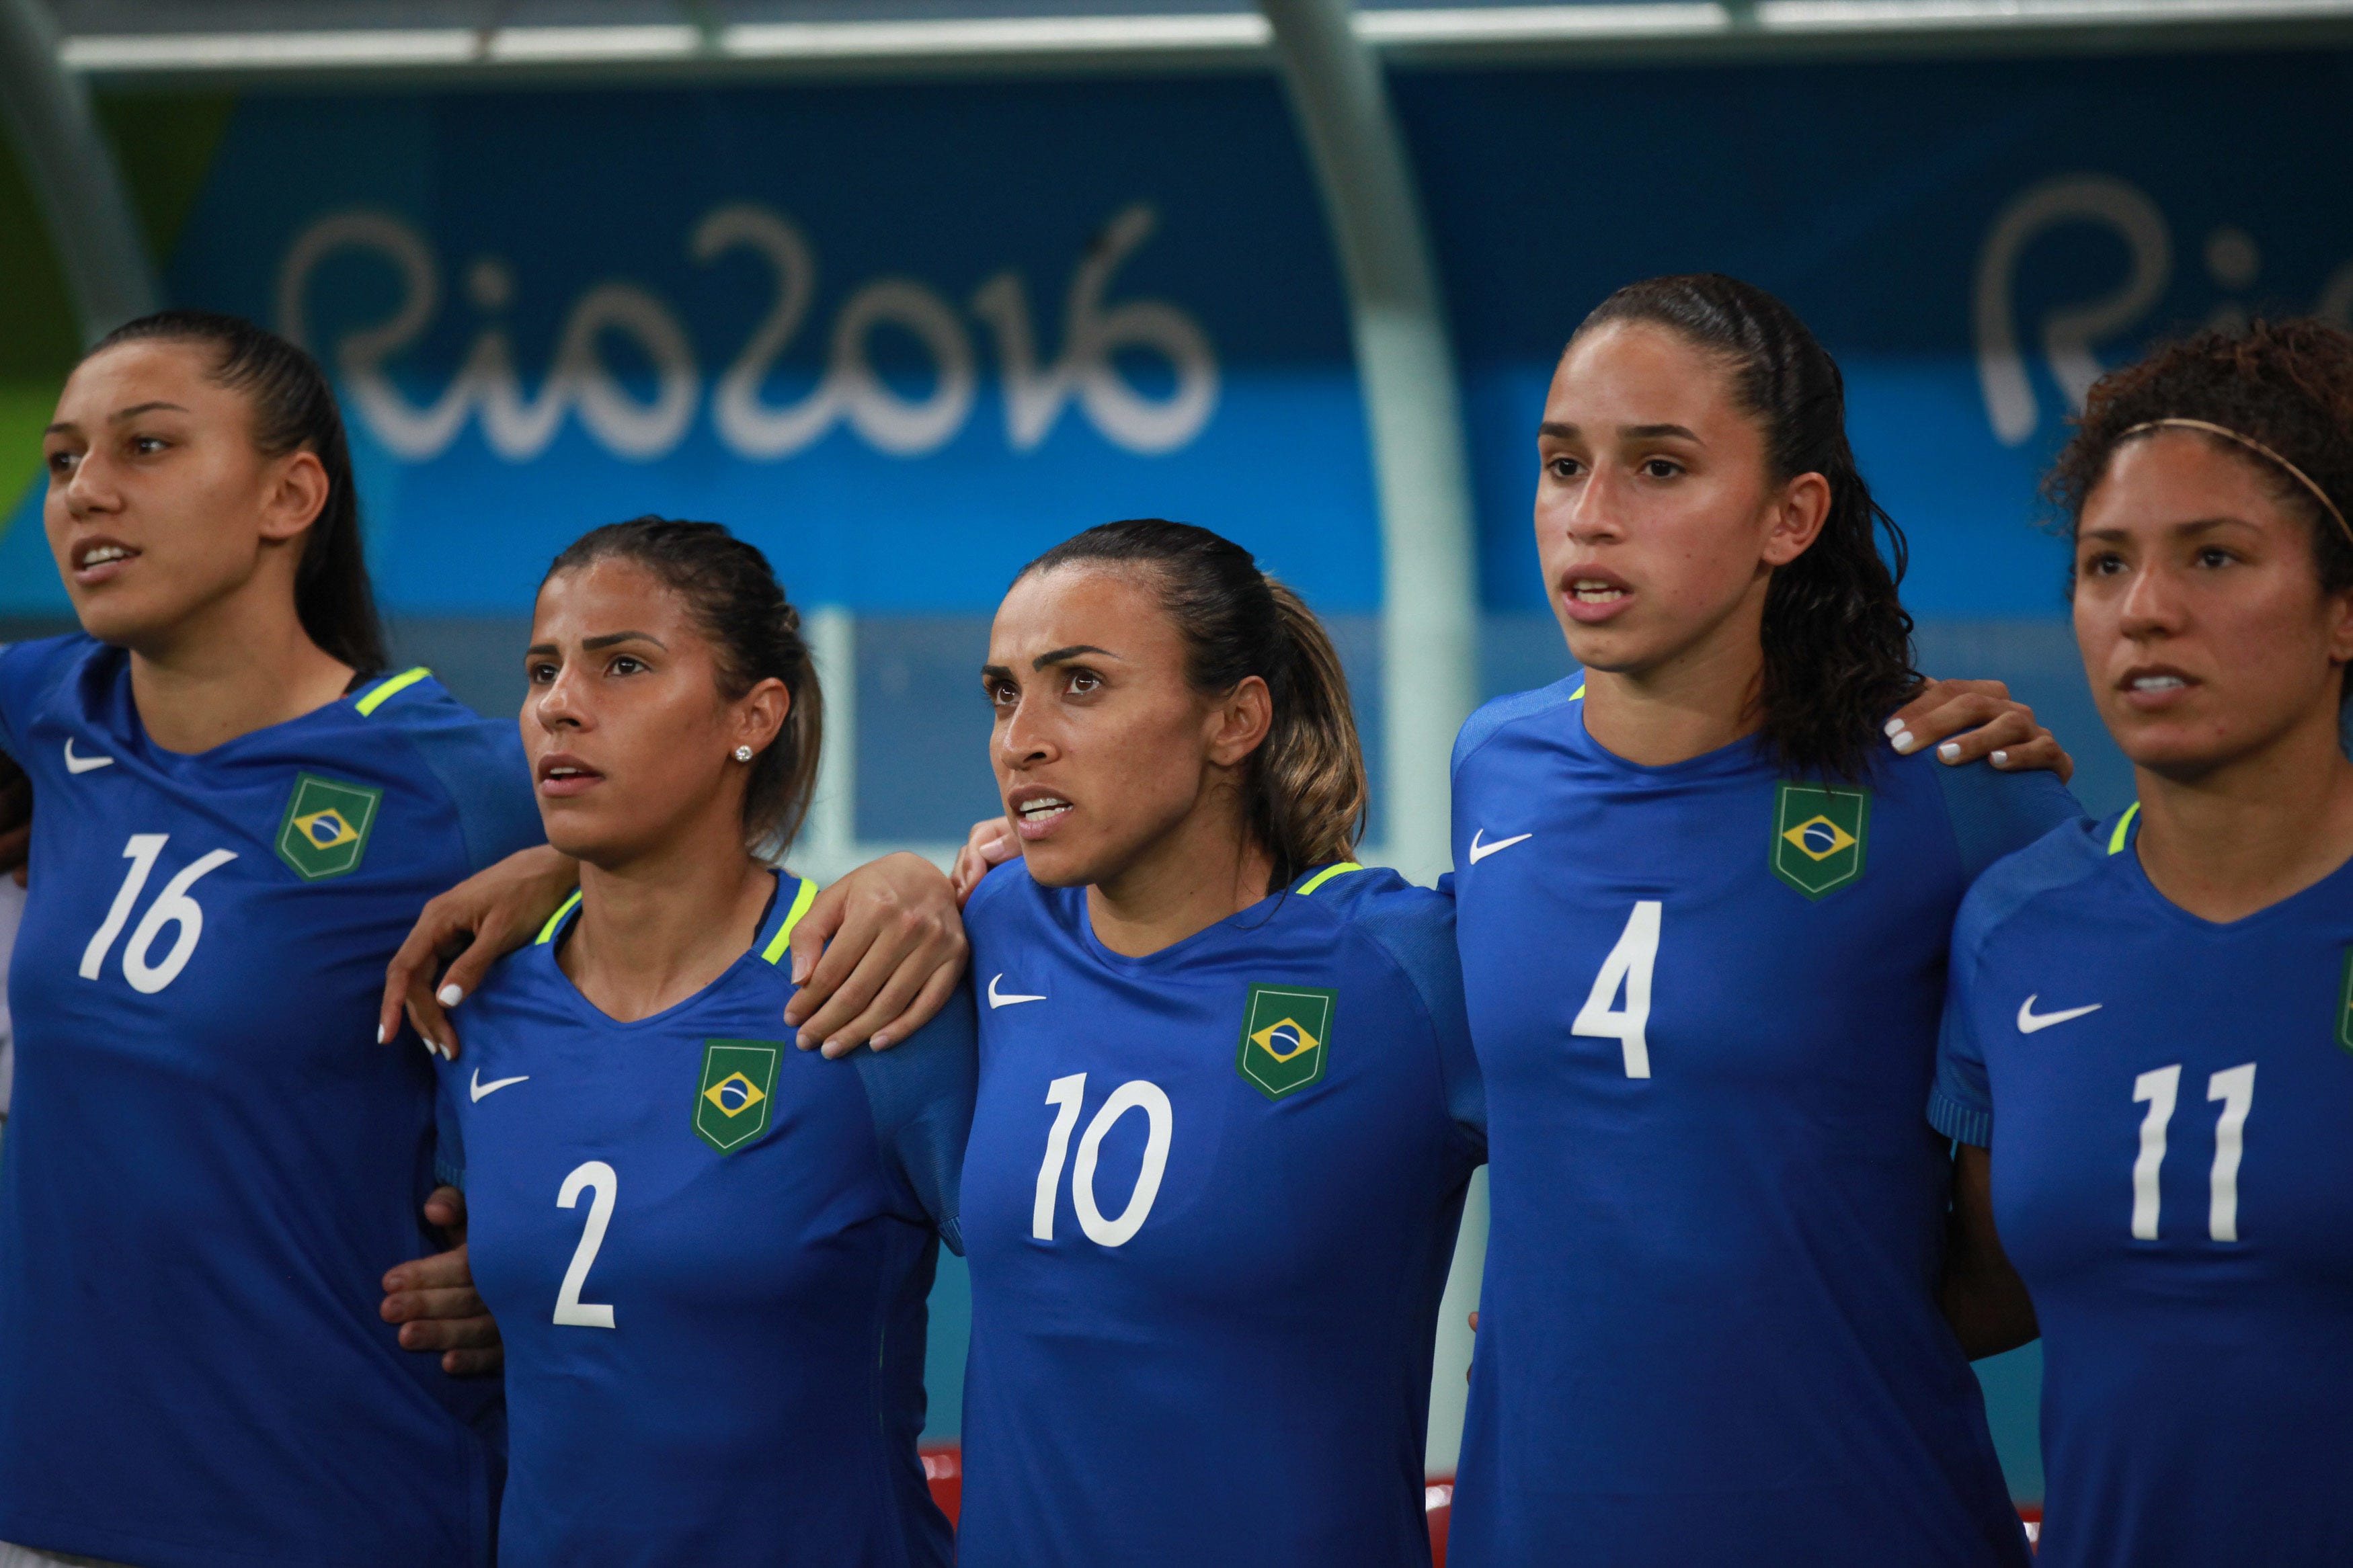 brazil soccer jersey womens